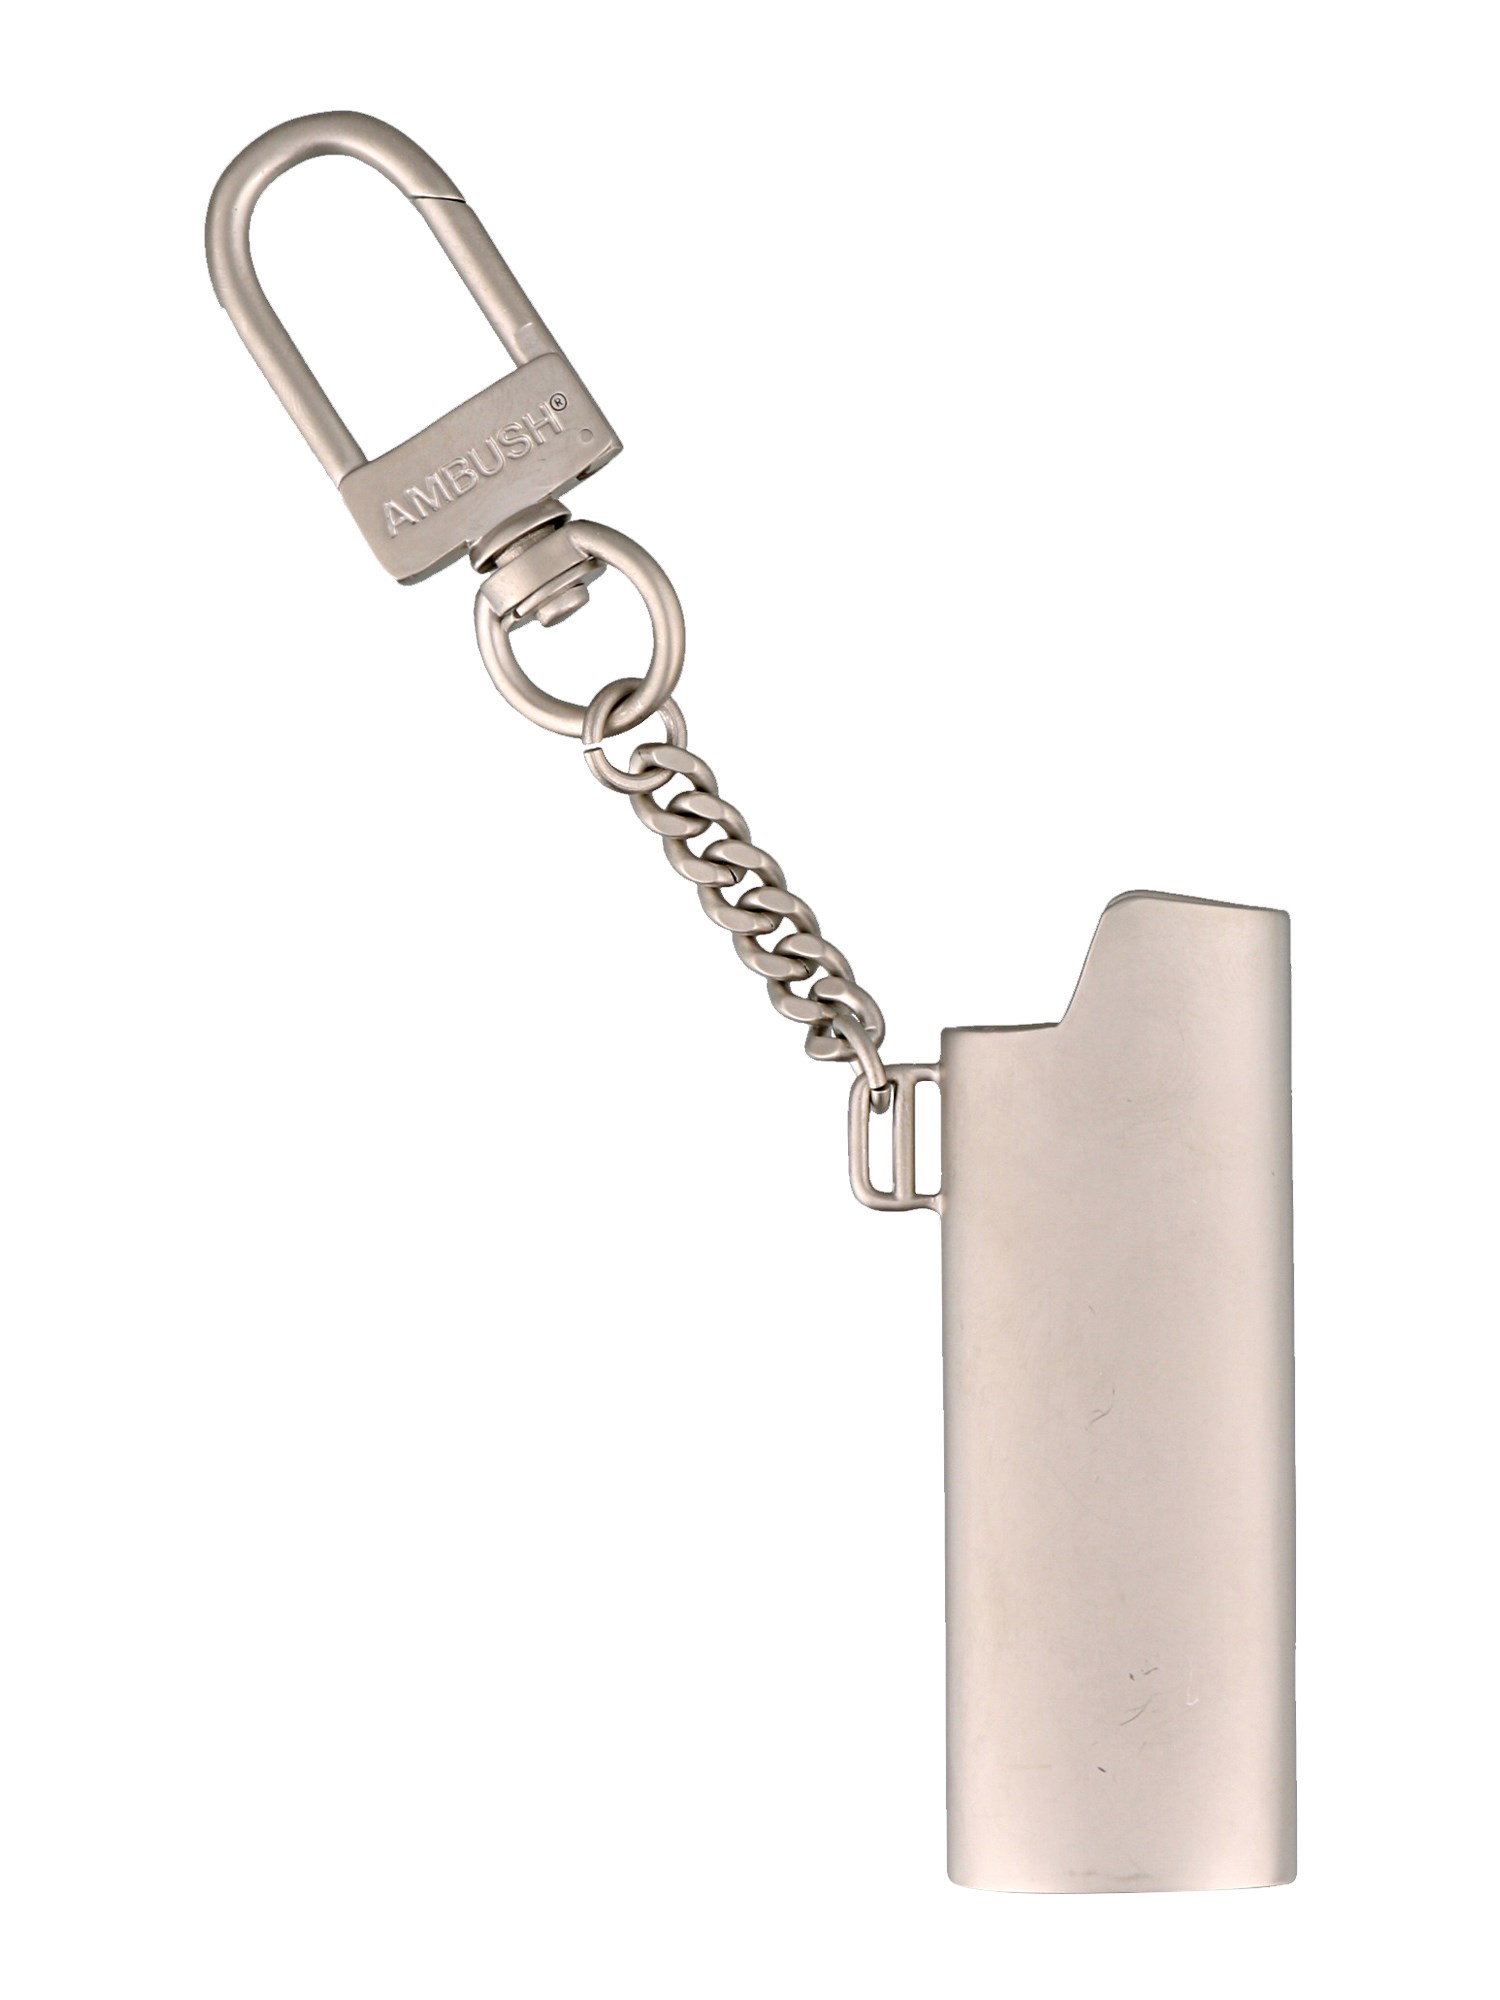 ambush key ring with lighter holder